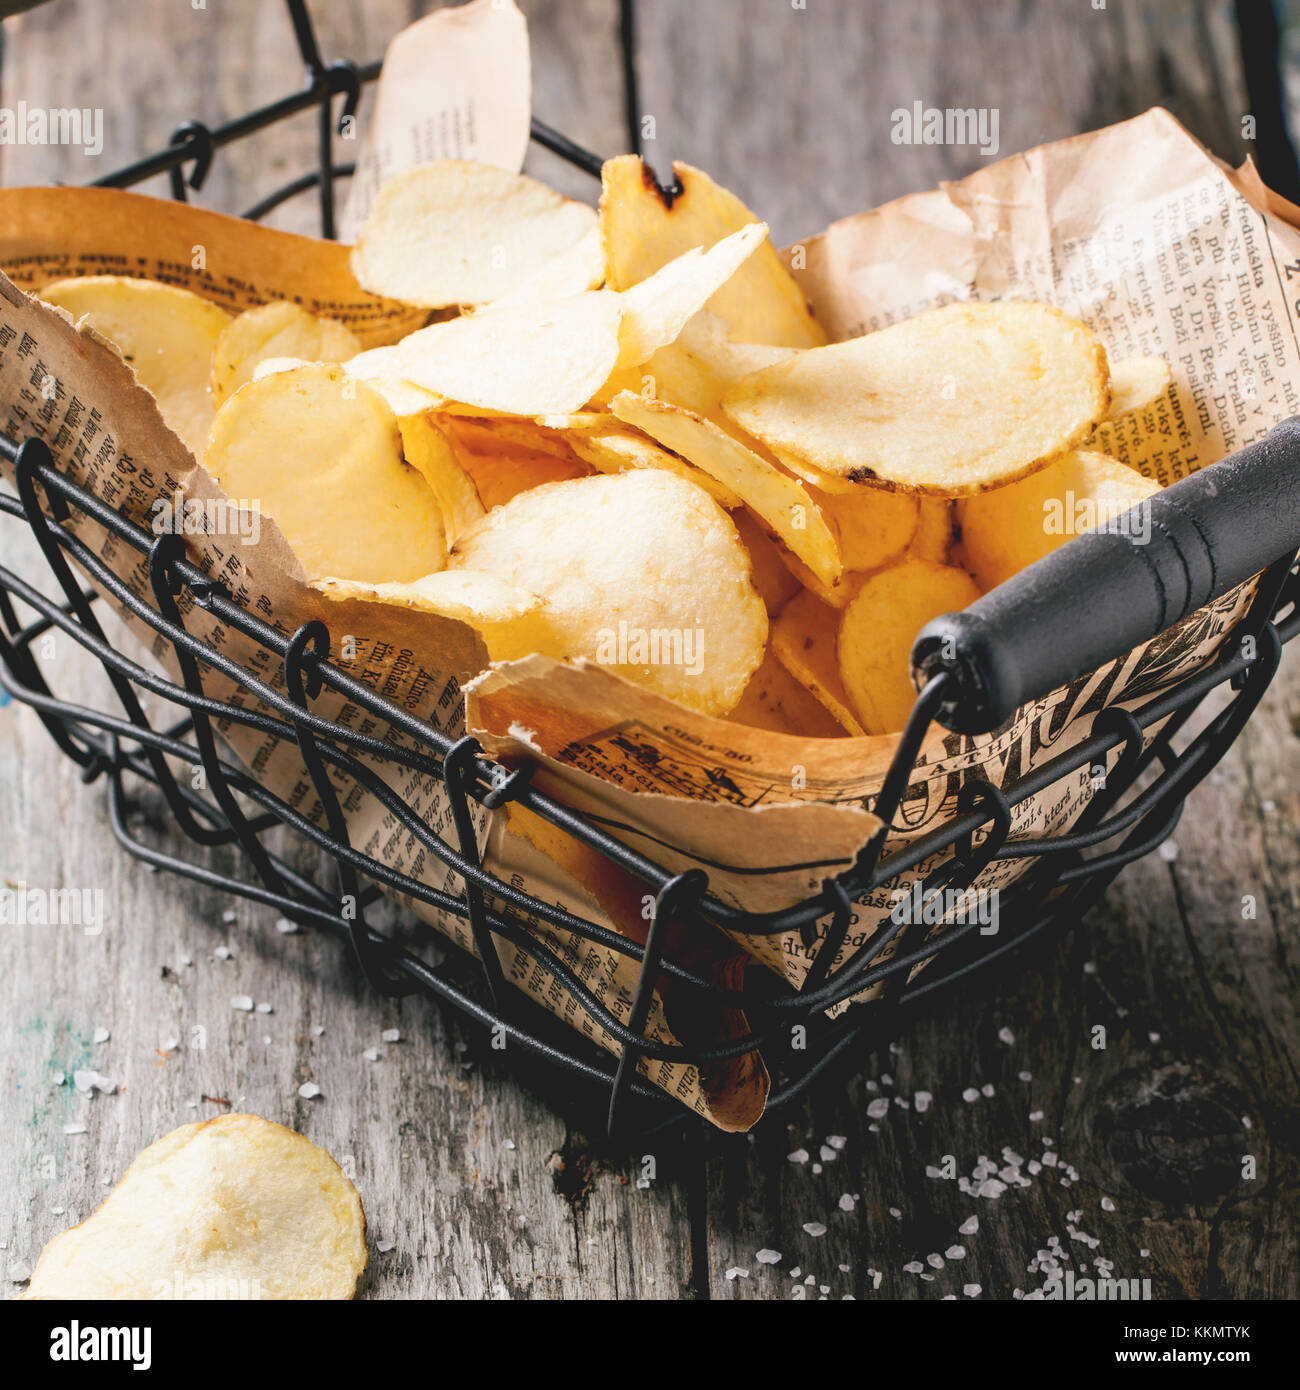 https://c8.alamy.com/comp/KKMTYK/basket-with-potato-chips-with-sea-salt-over-old-wooden-table-square-KKMTYK.jpg